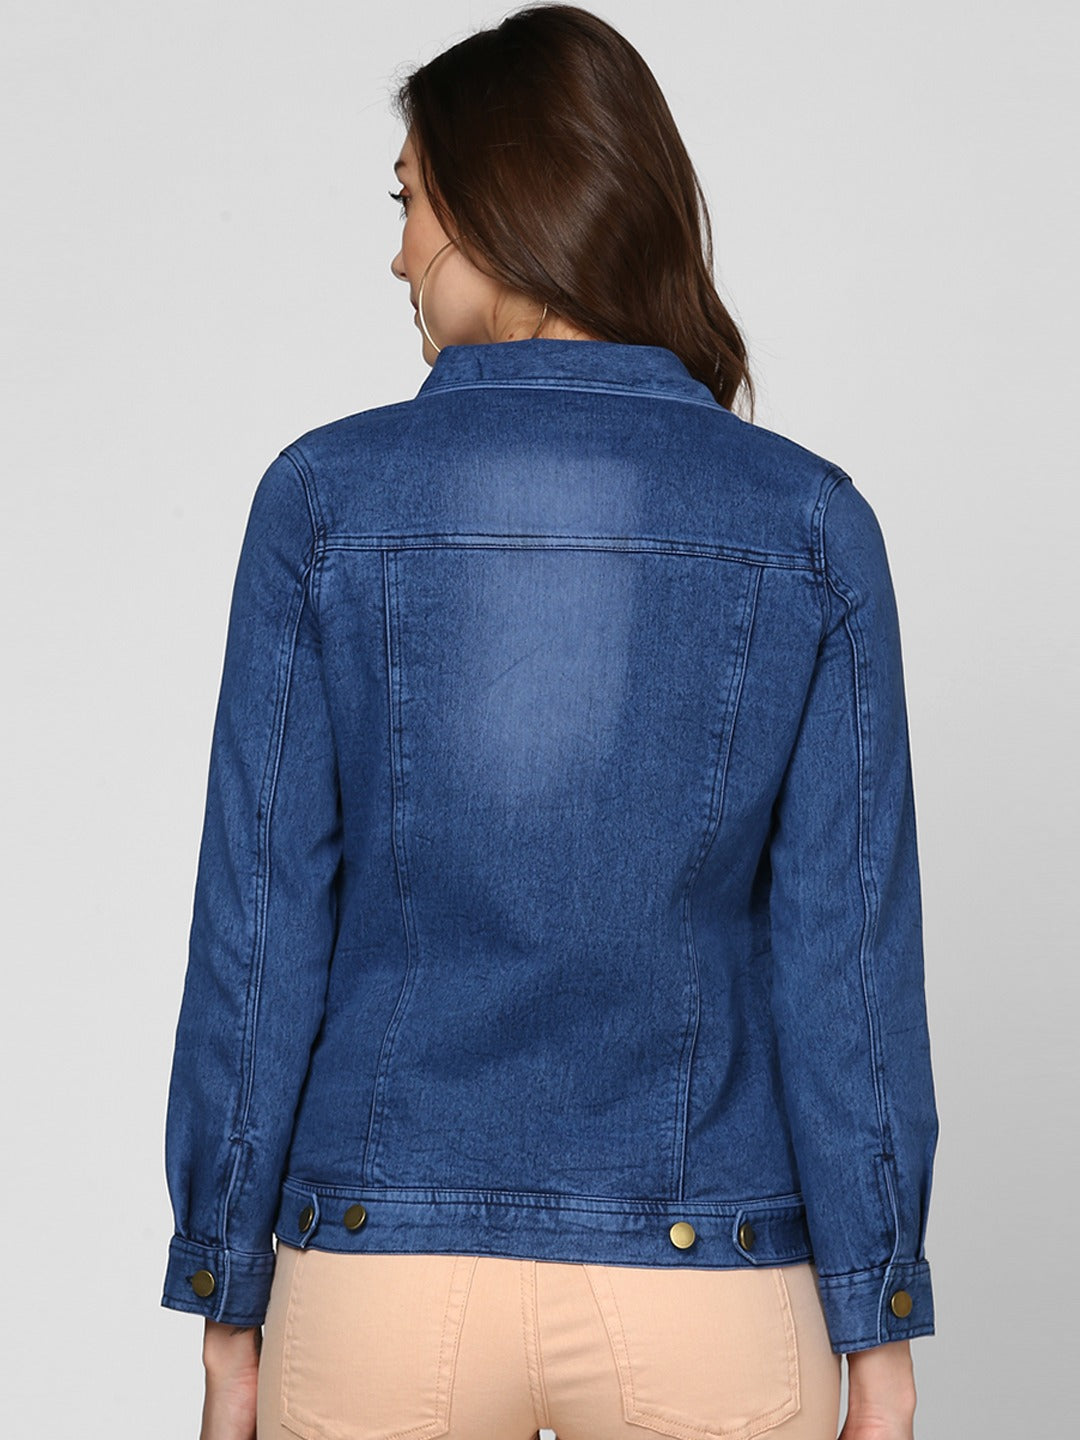 Stylish women's blue denim jacket on display